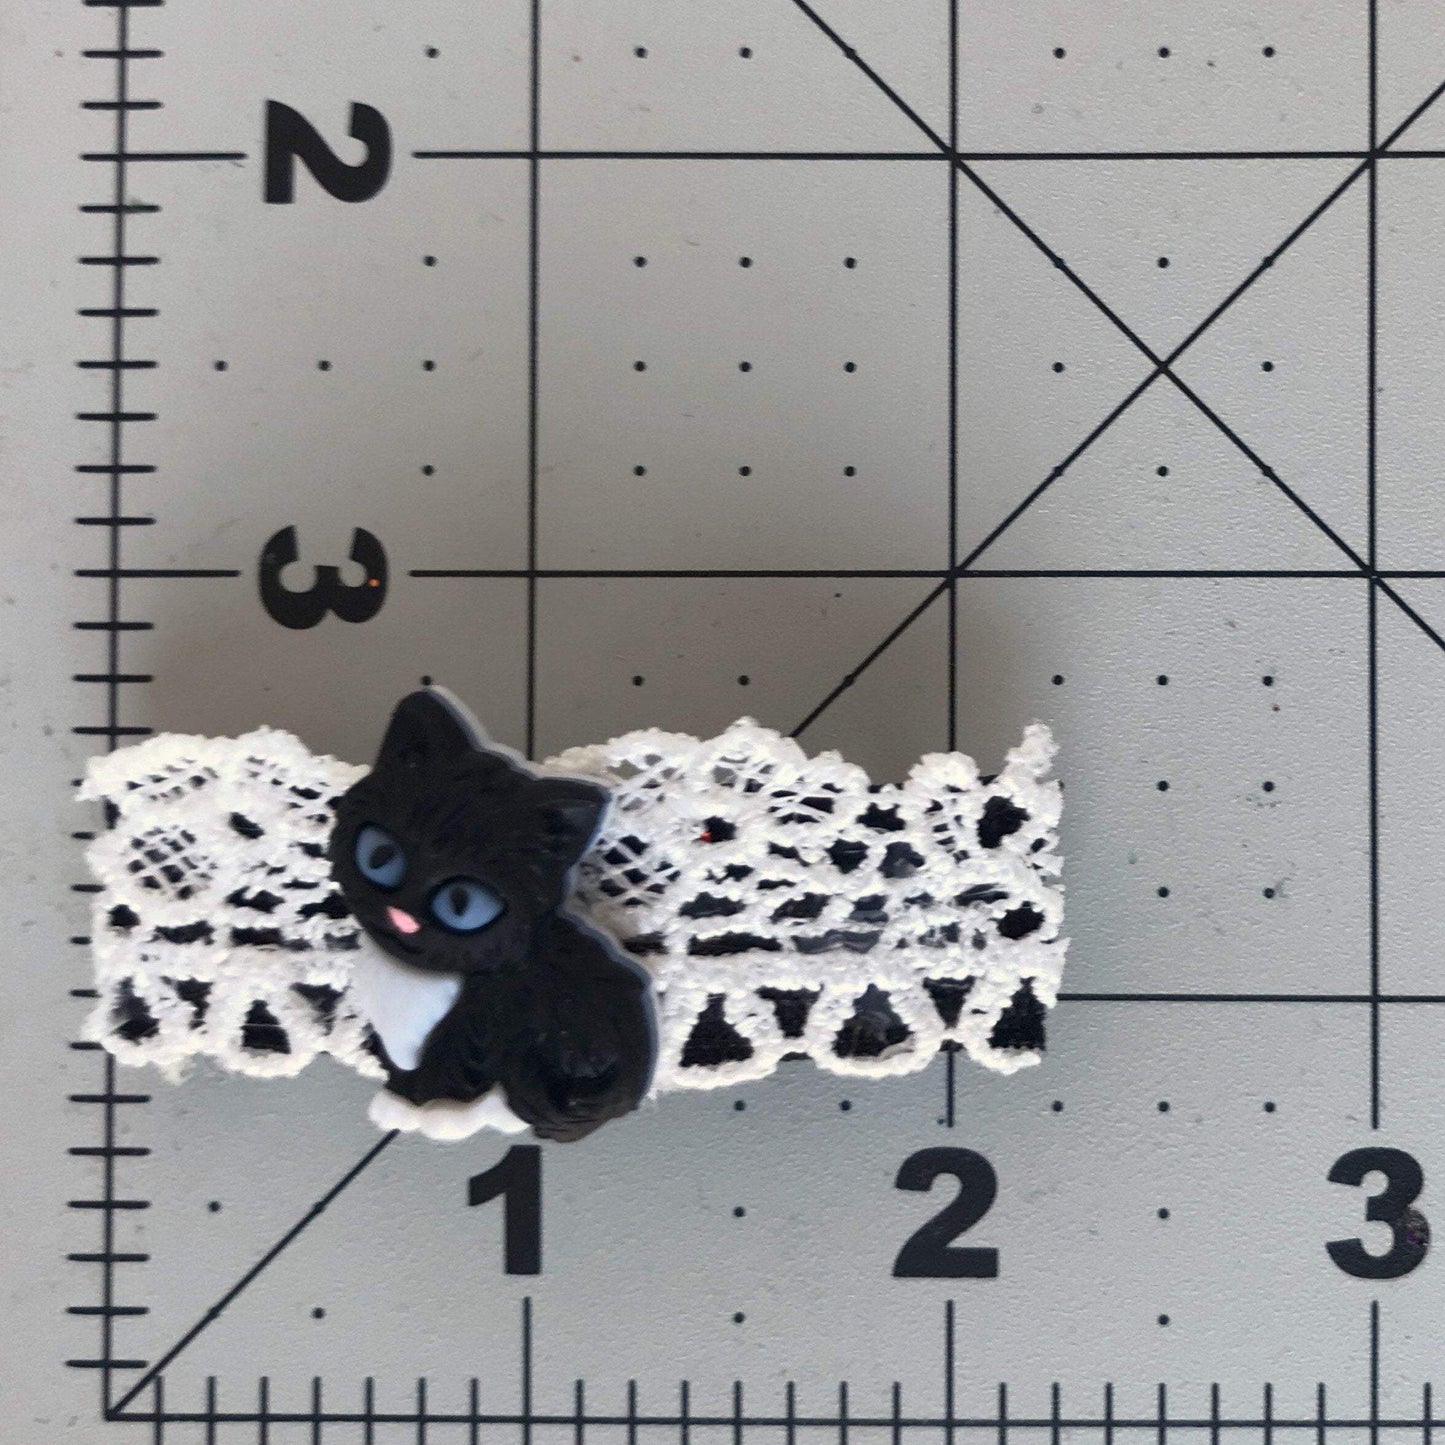 Black & White Cat Hair Clip - Adorable Feline-Inspired Accessory